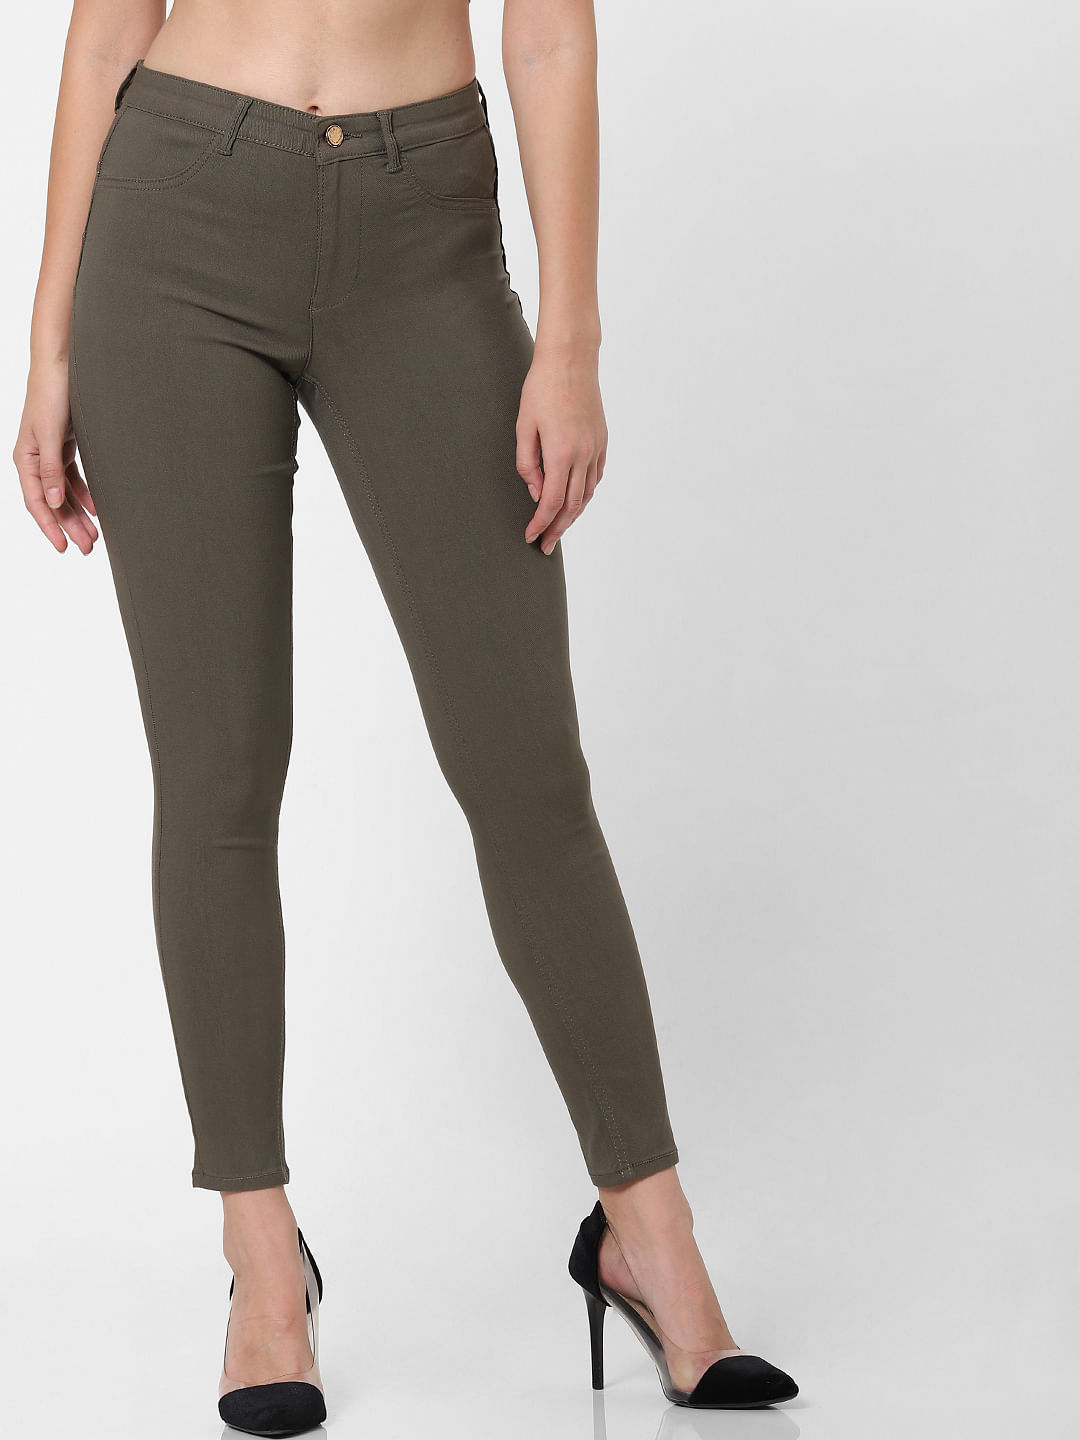 Olive Green Trouser Pants - Trousers - Woven Pants - Dress Pants - Lulus